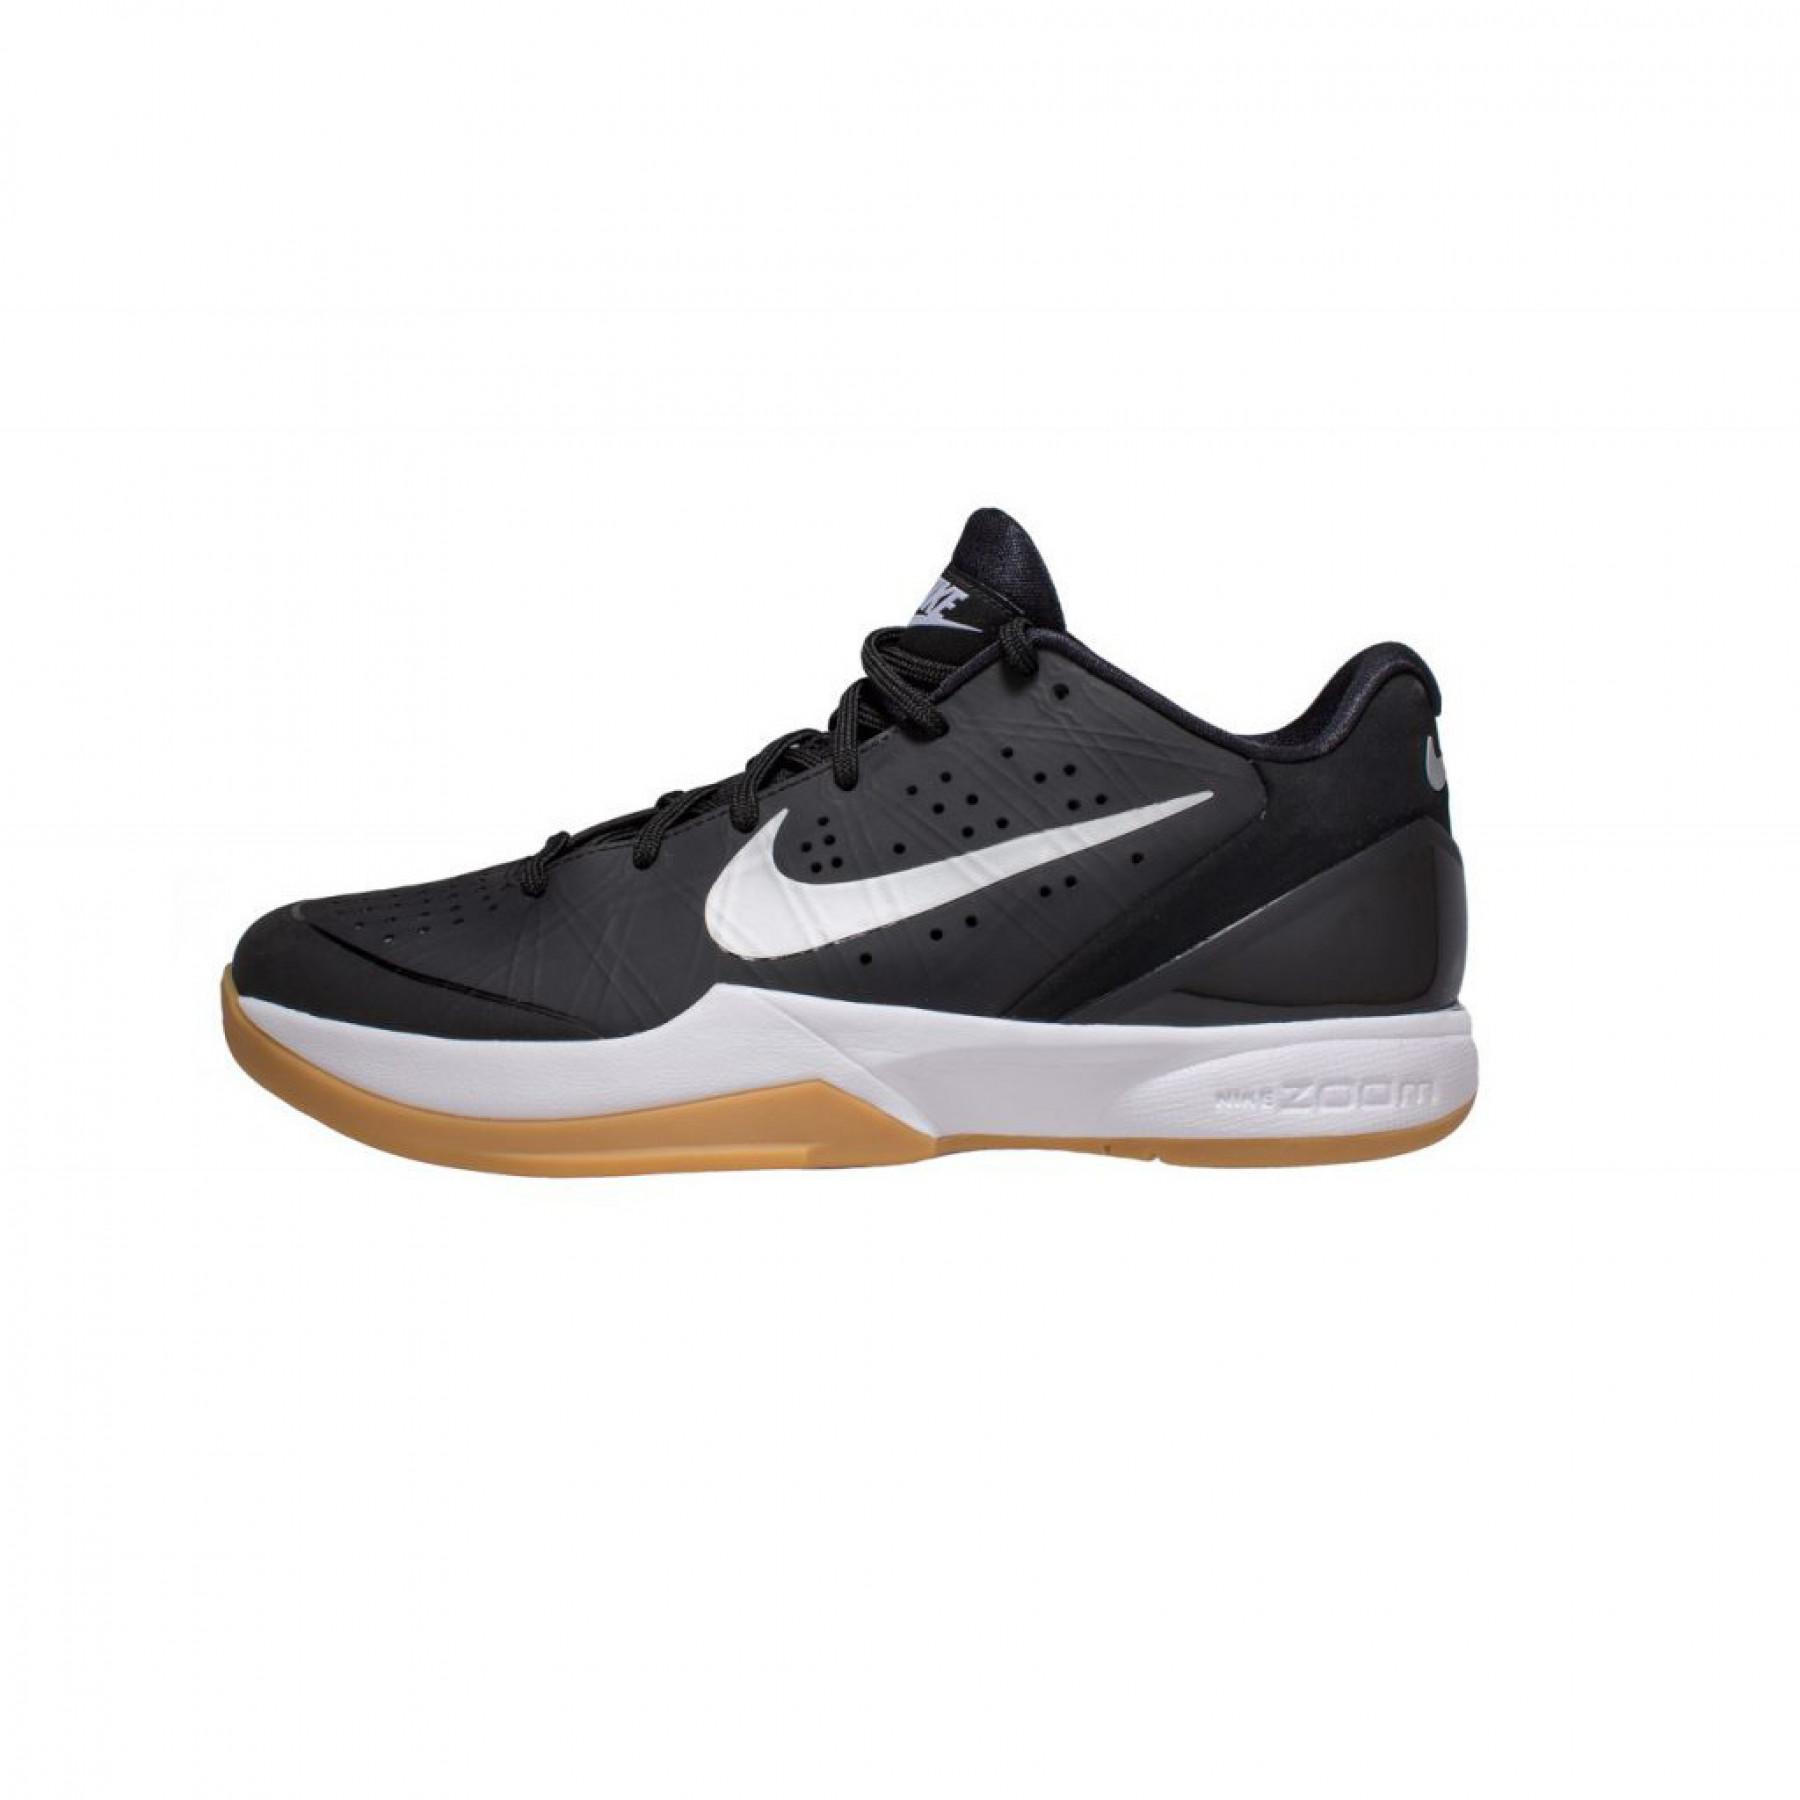 Zapatos Nike Air Zoom HyperAttack noir